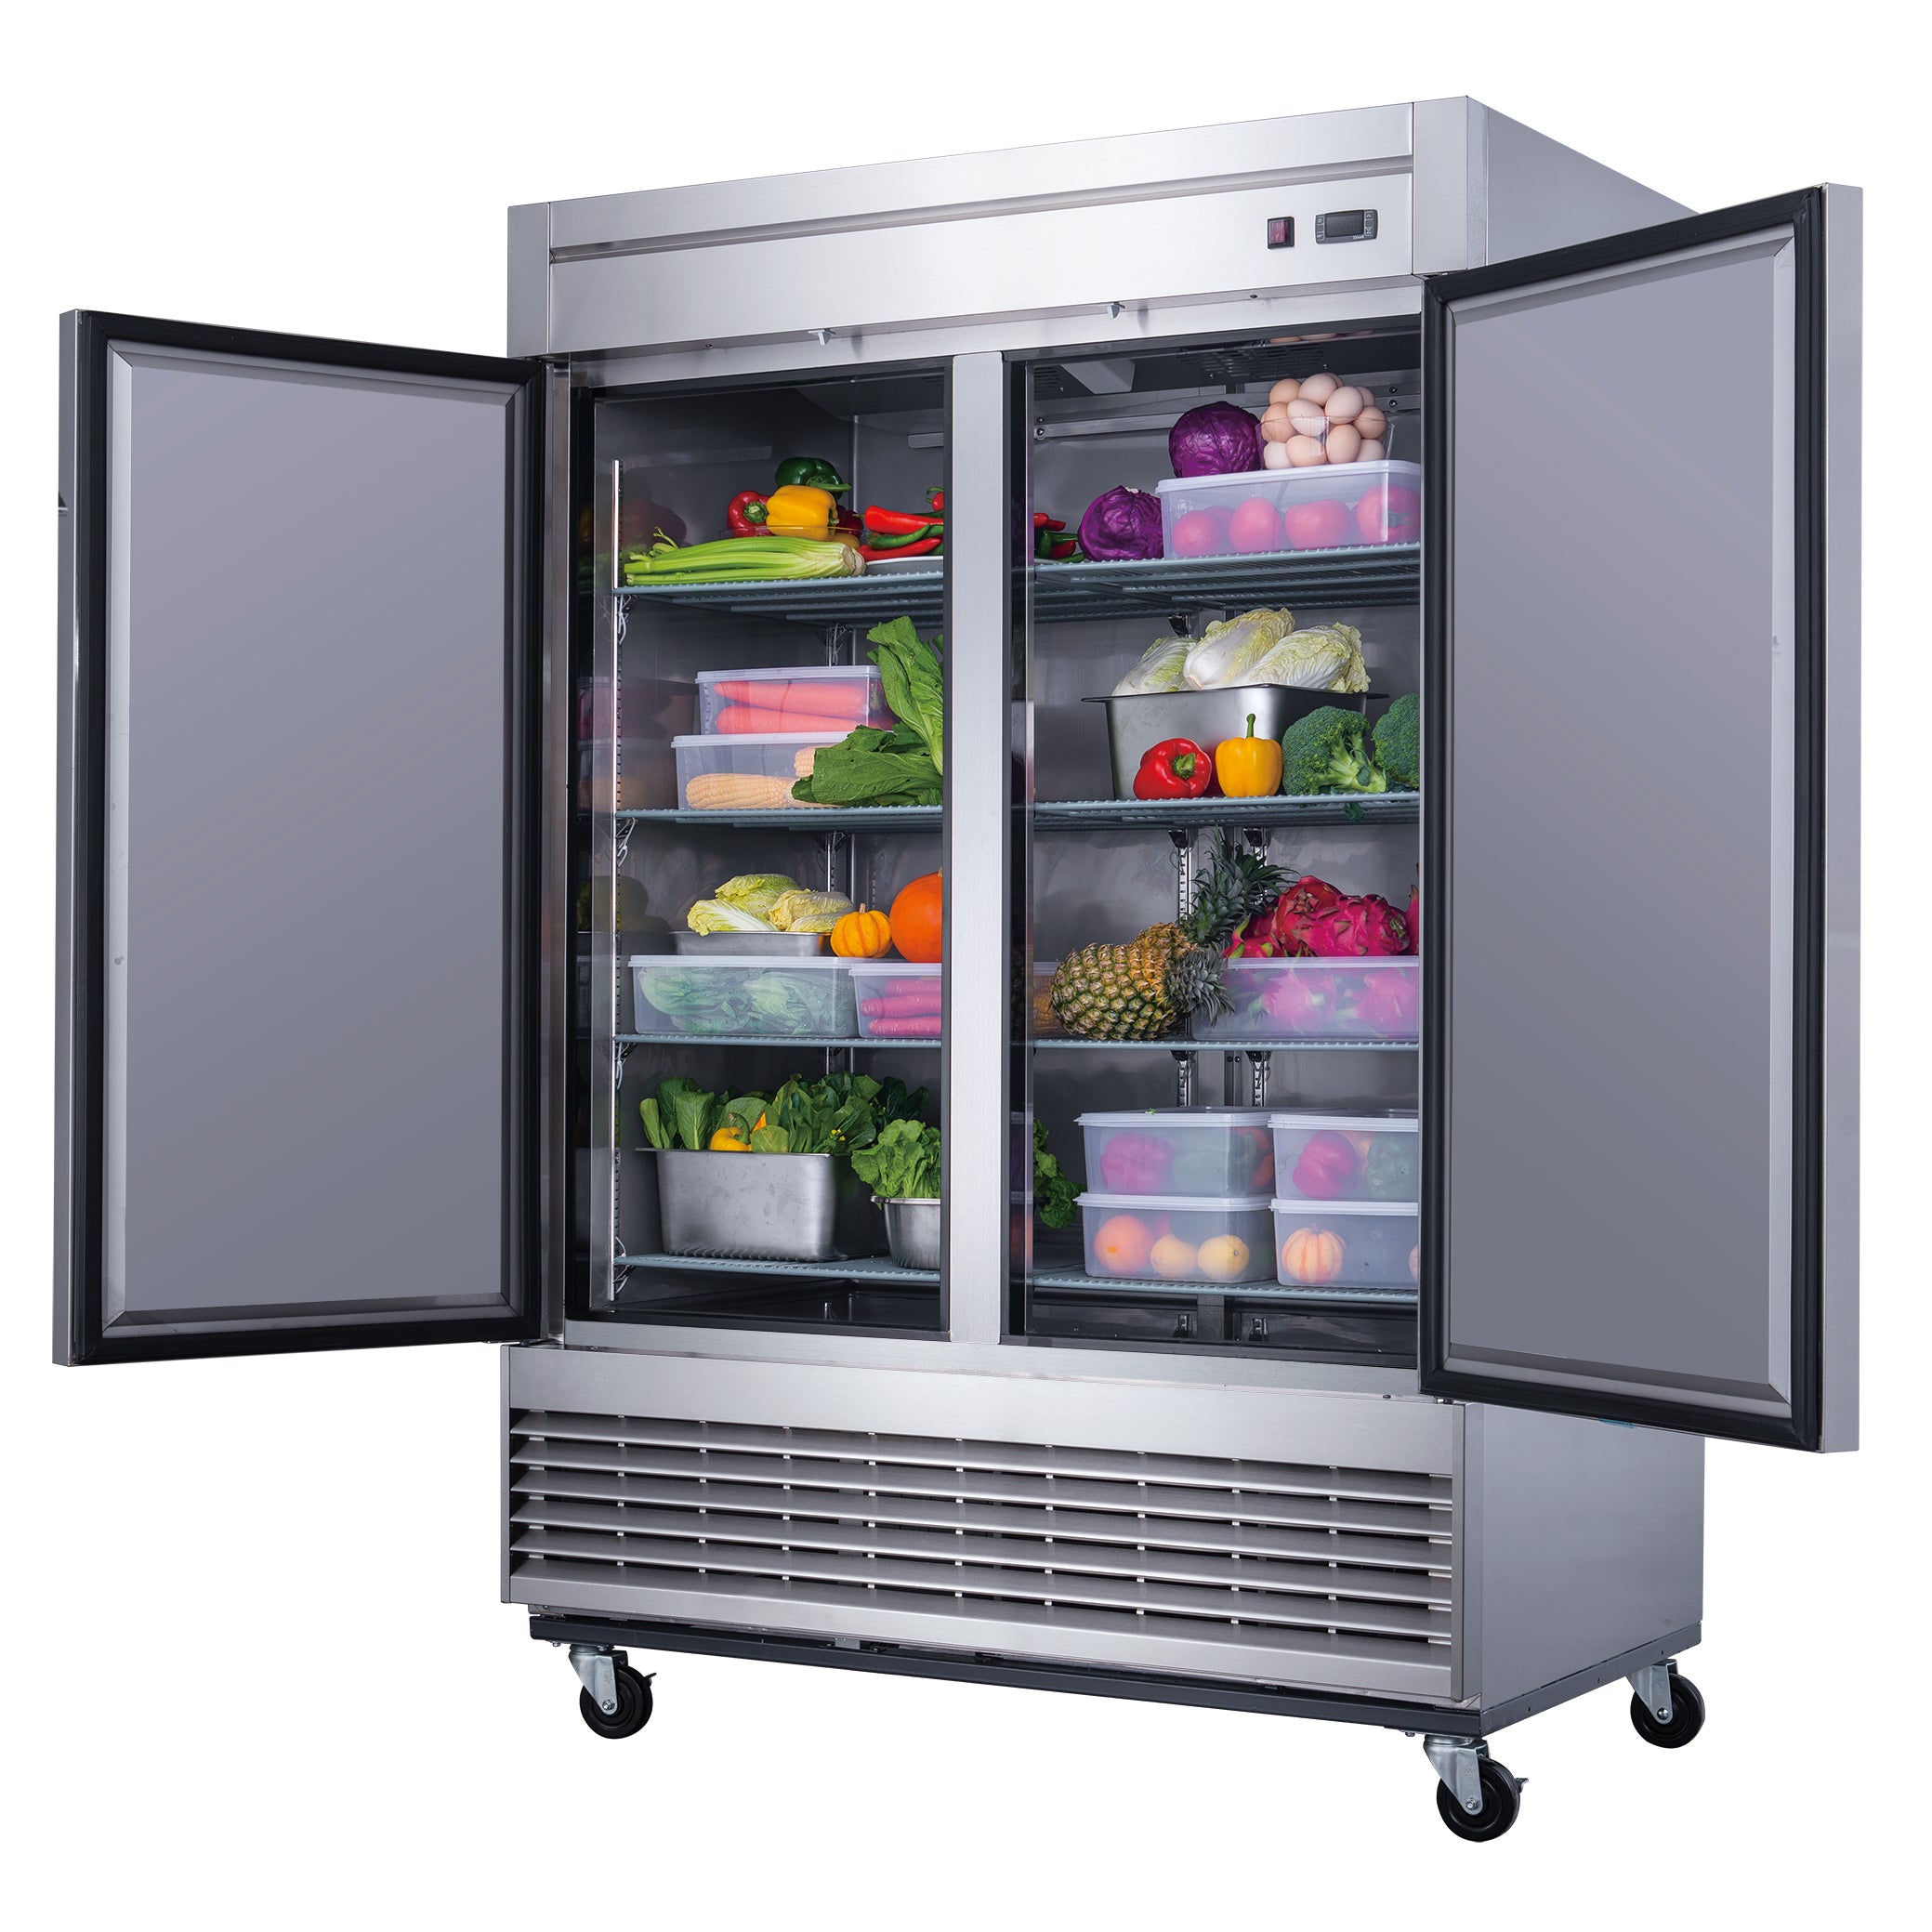 Chef AAA - T55R, Commercial 55 Reach-In Refrigerator Solid 2 Door 40